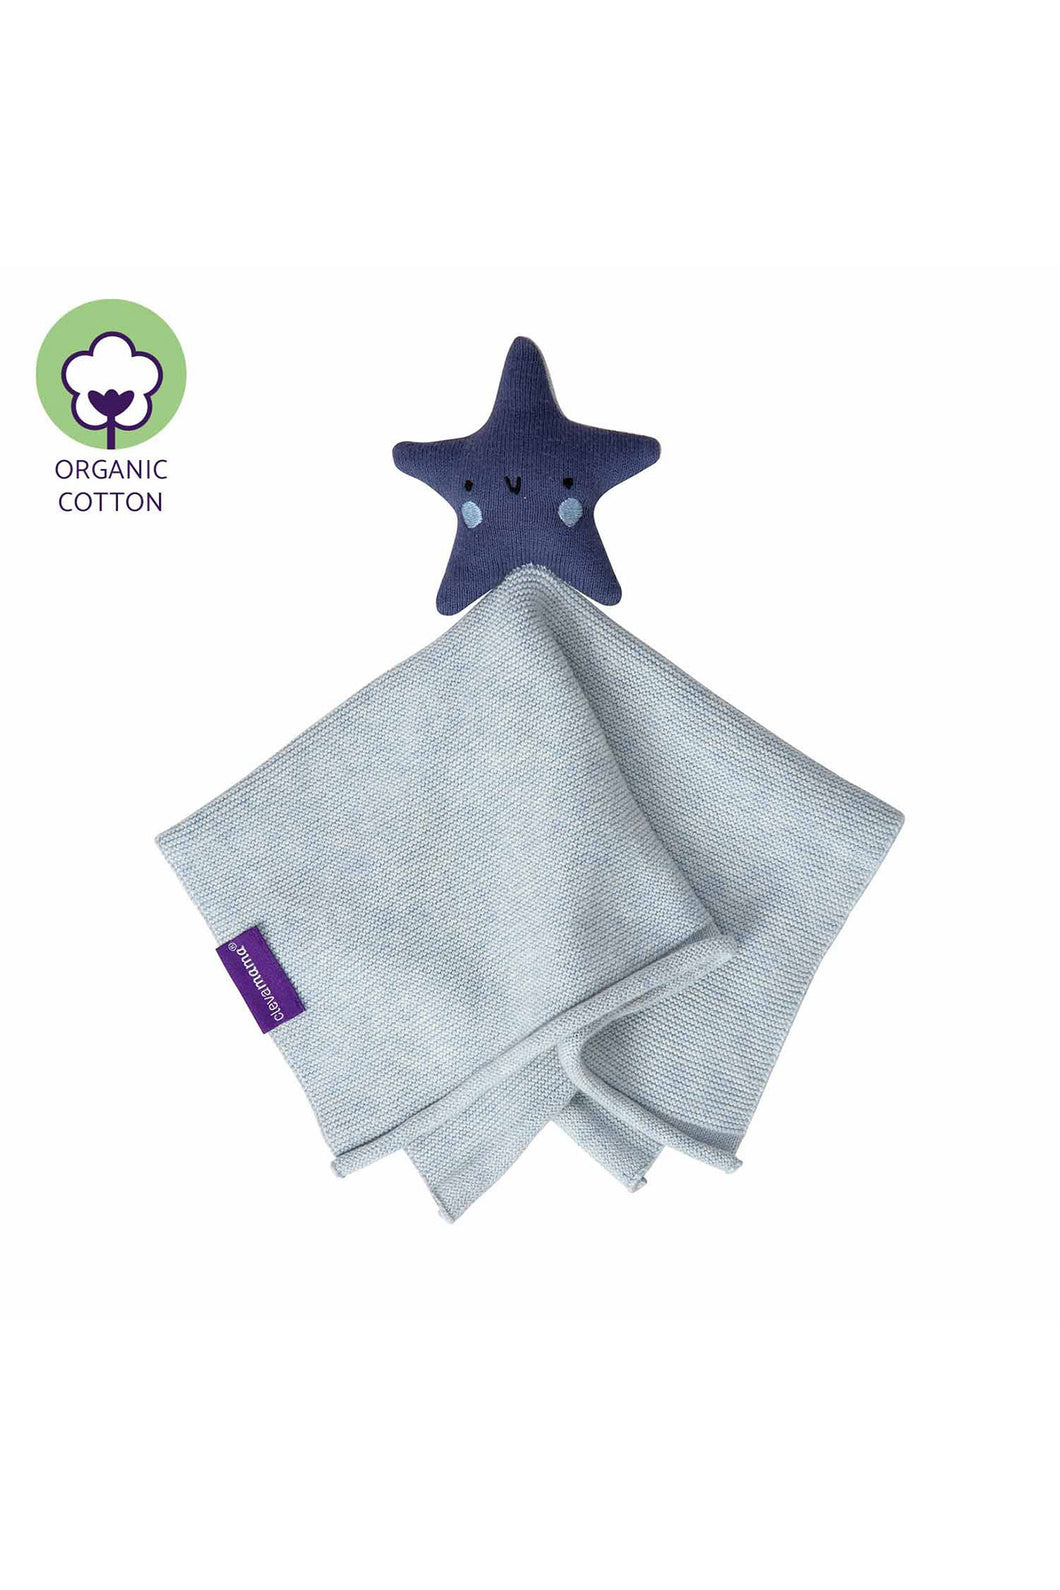 Clevamama Shooting Star Comforter Organic Cotton Knit